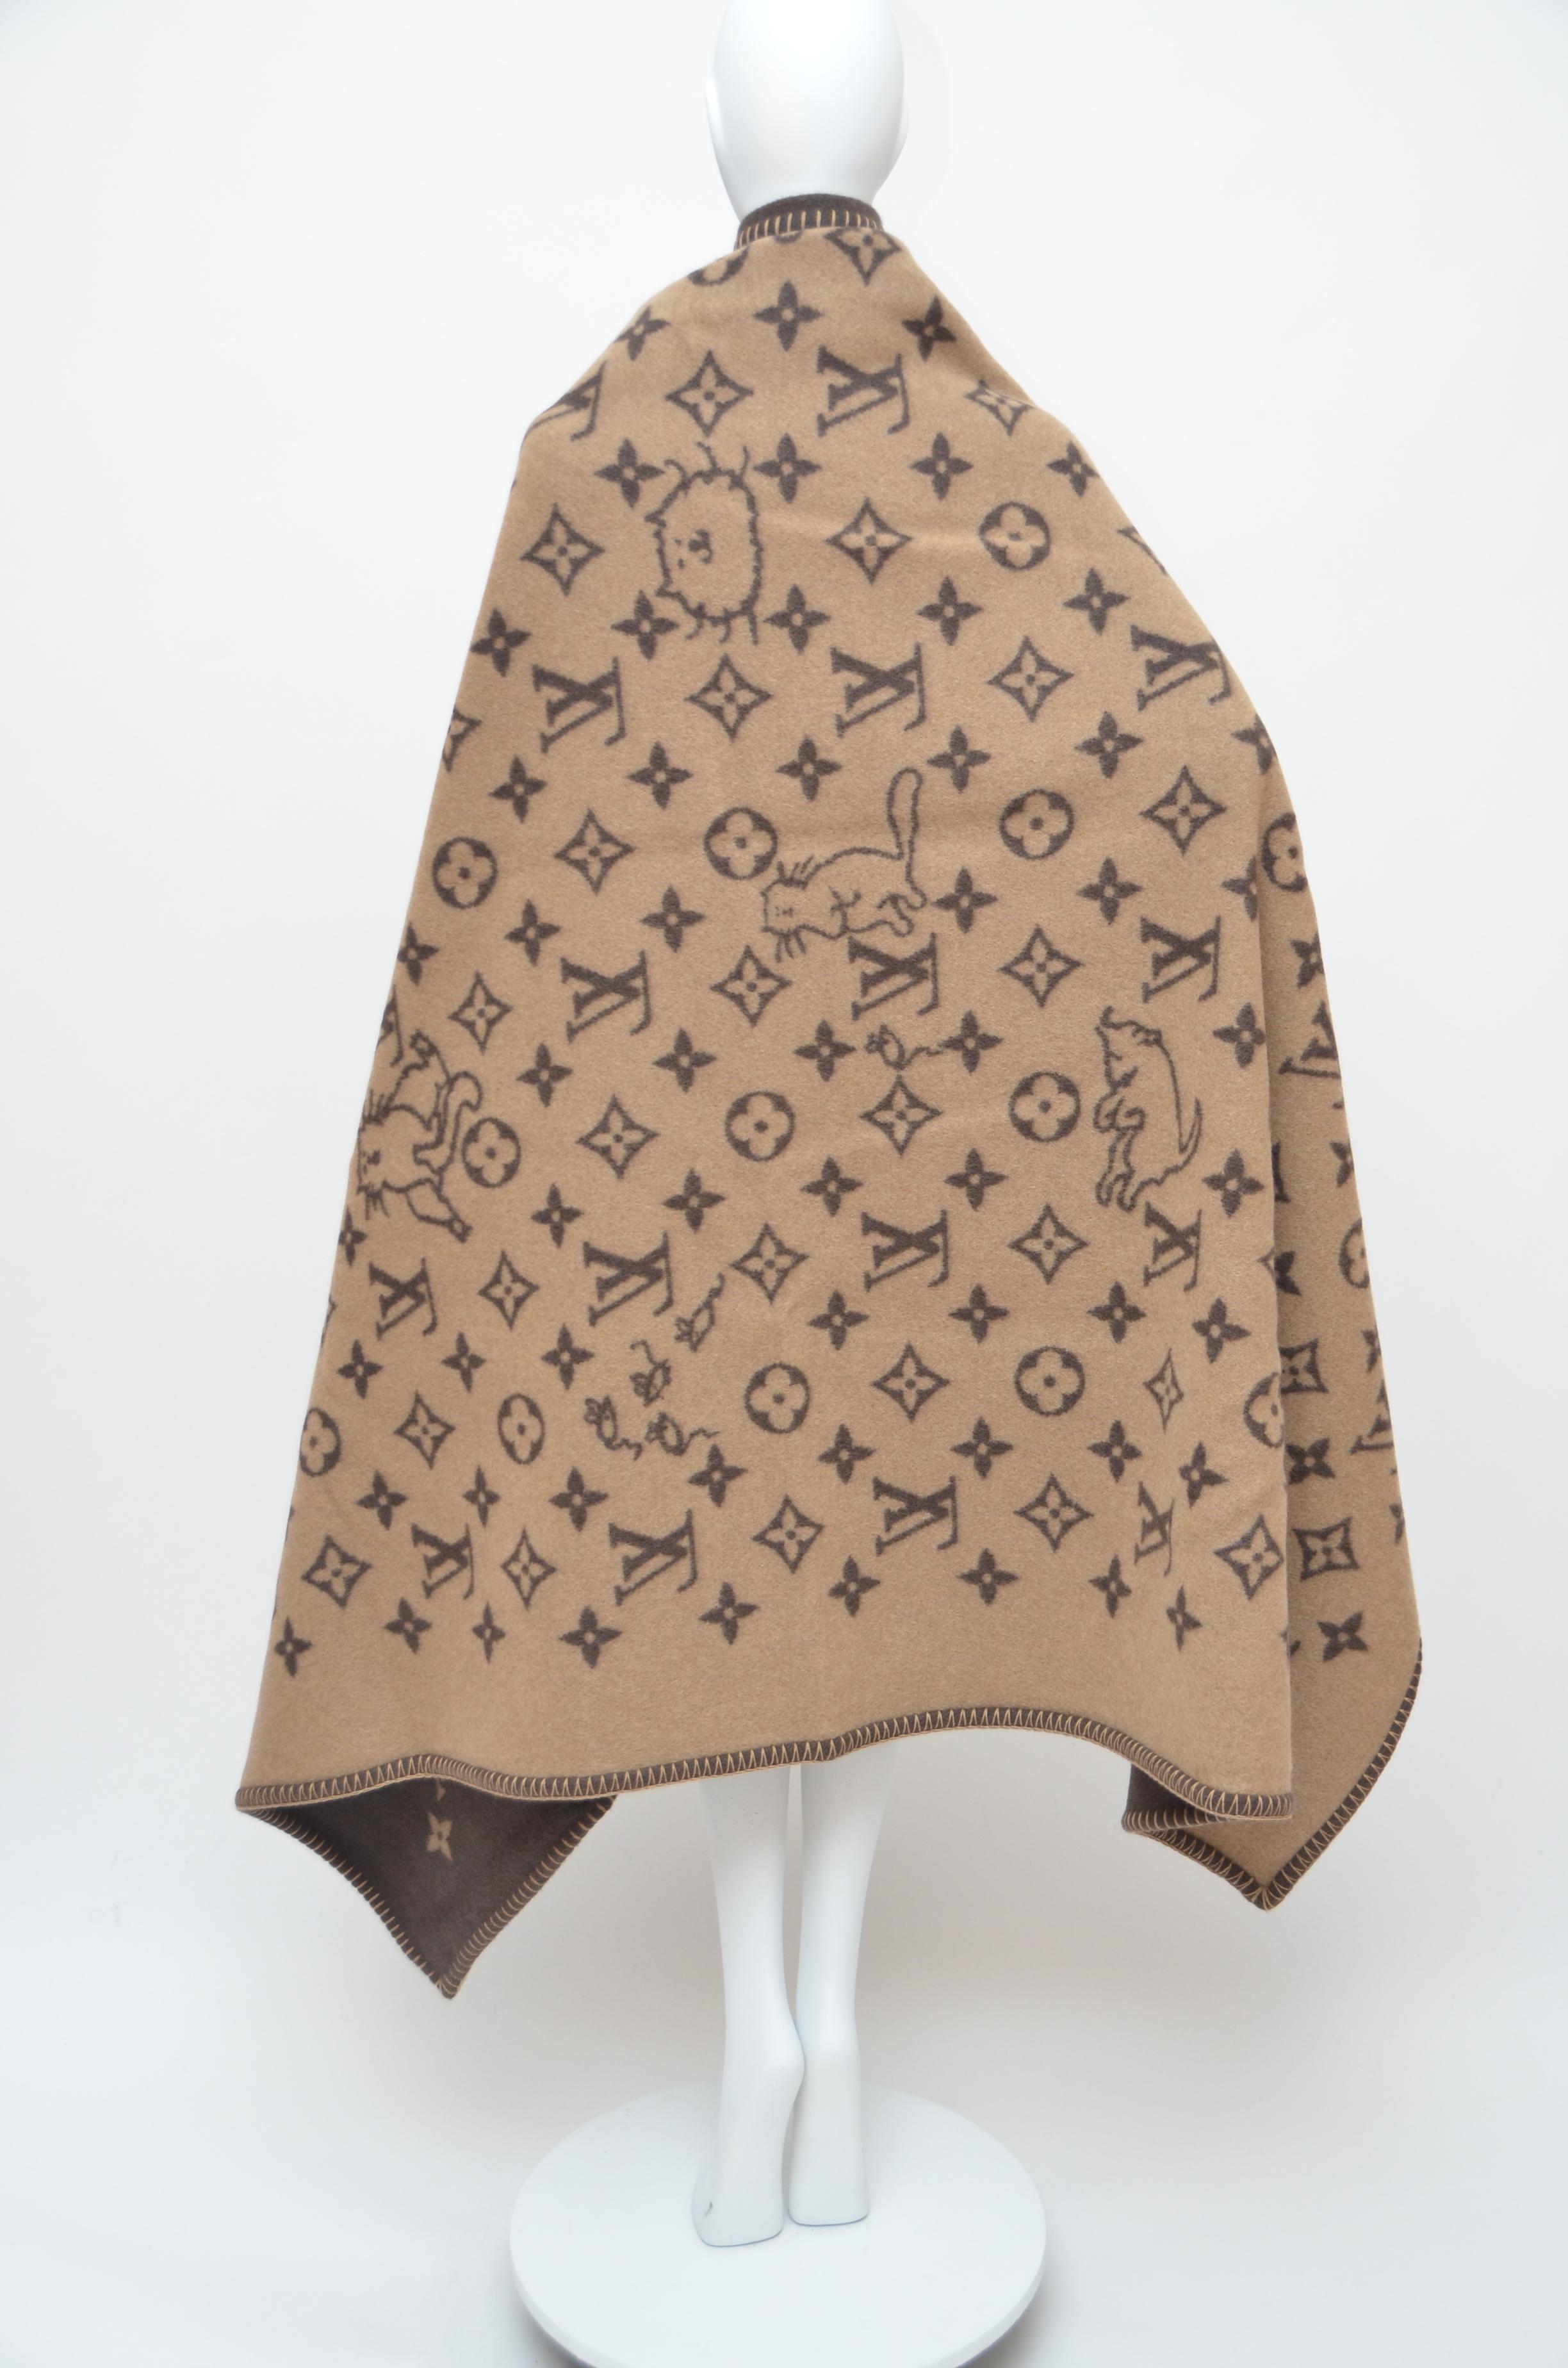 Playboy X Louis Vuitton Queen Size Plush Blanket